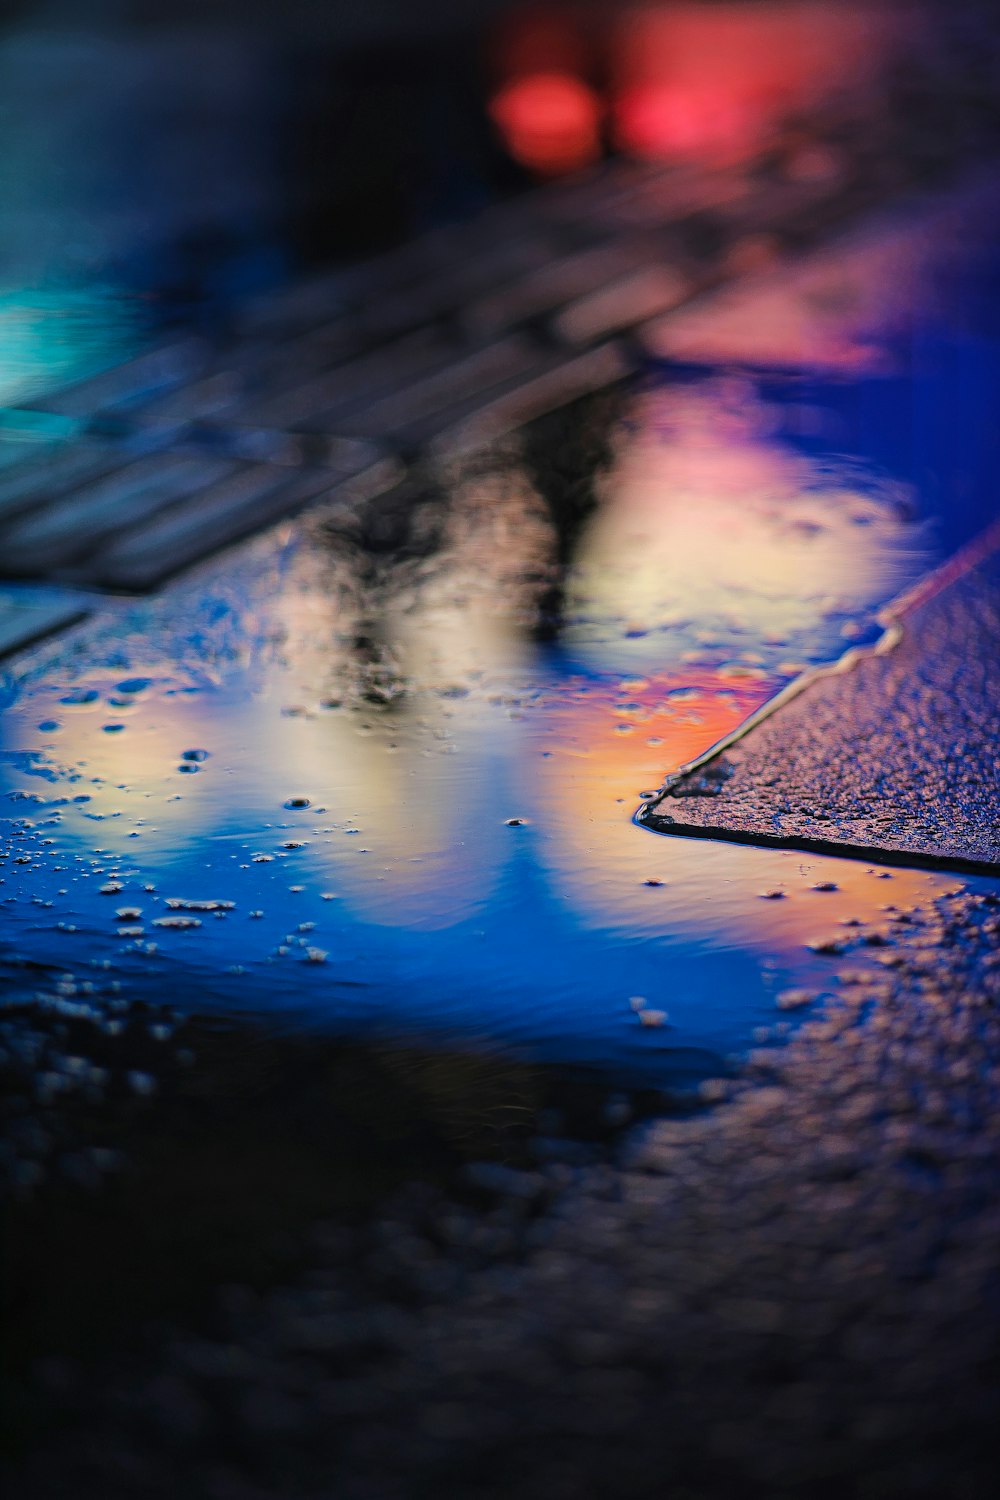 water droplets on brown concrete floor